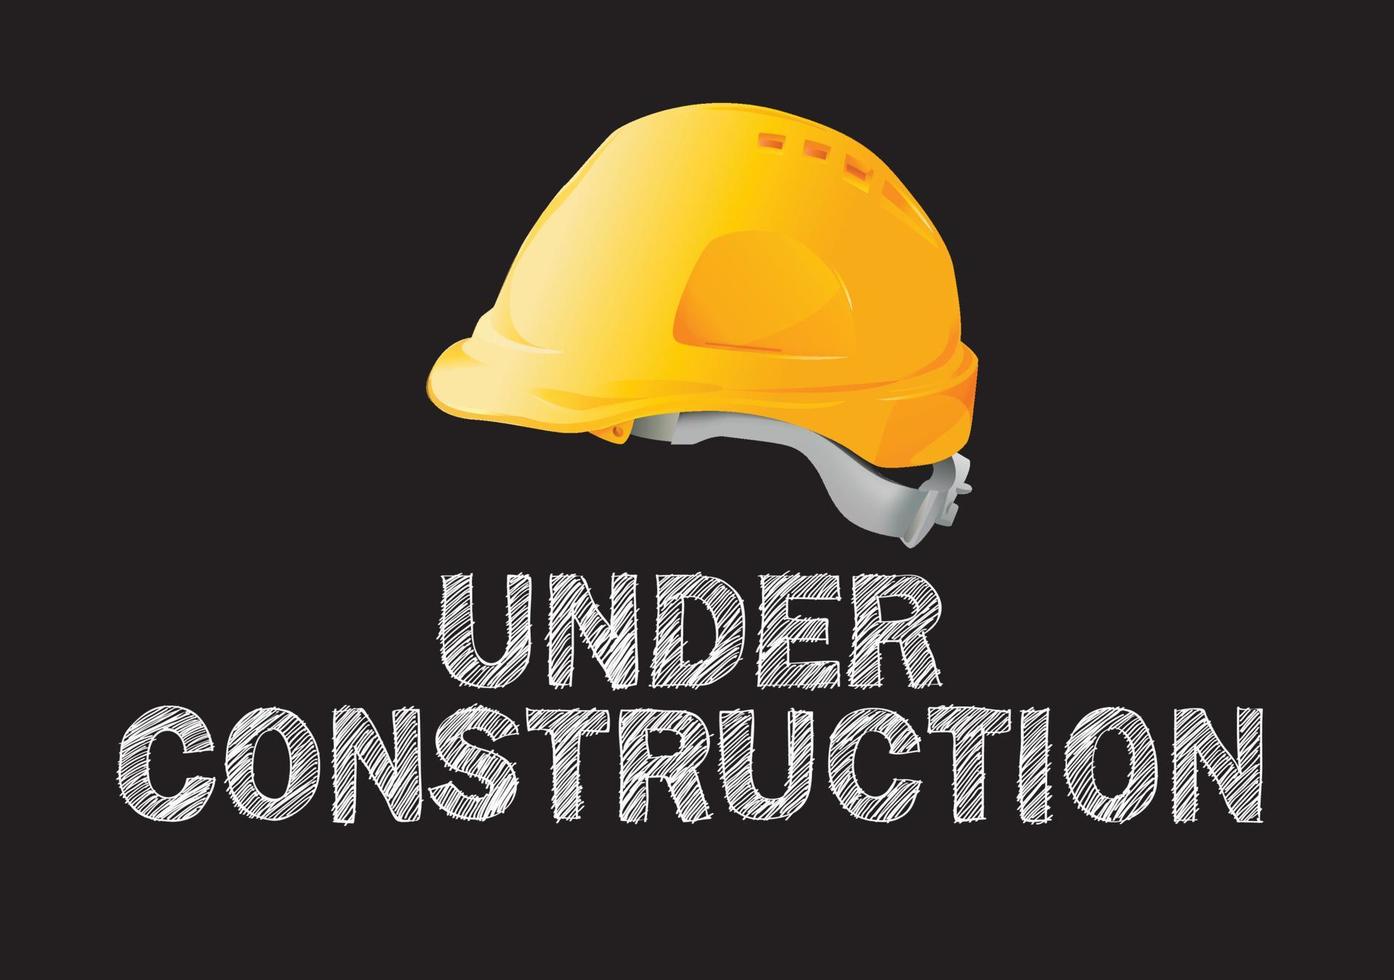 Building under Construction site vector